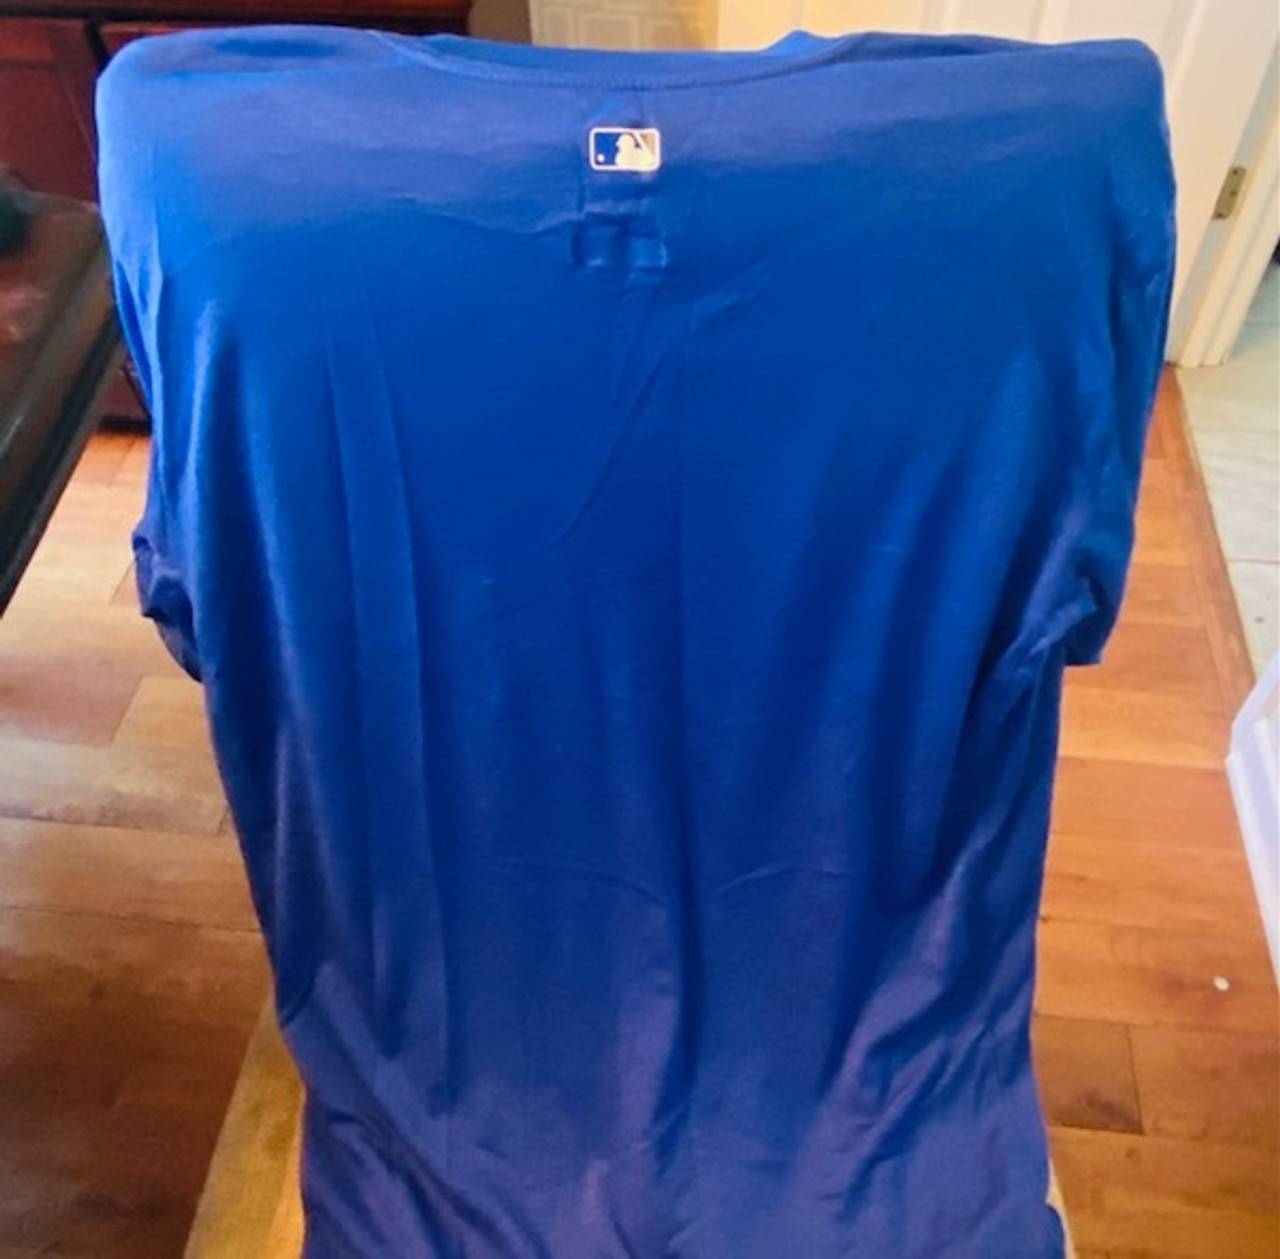 Adult Toronto Blue Jays Logo T-Shirt